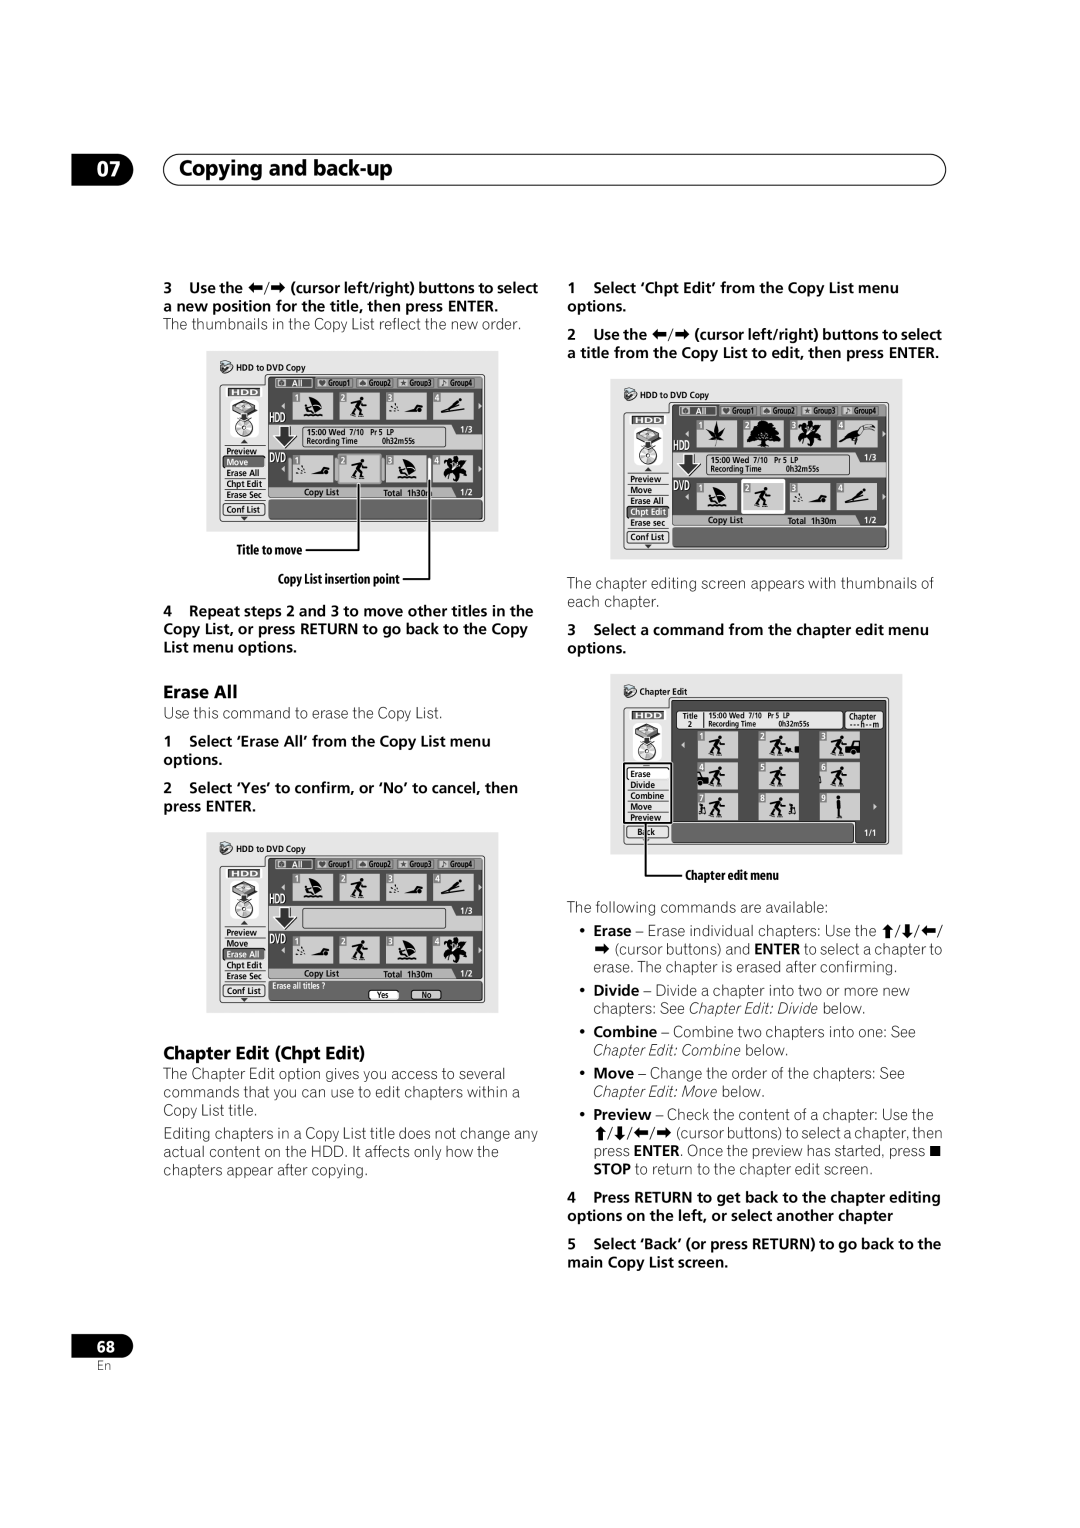 Pioneer DVR-720H, DVR-520H manual Erase All, Chapter Edit Chpt Edit, Copying and back-up, Chapter Edit Combine below 